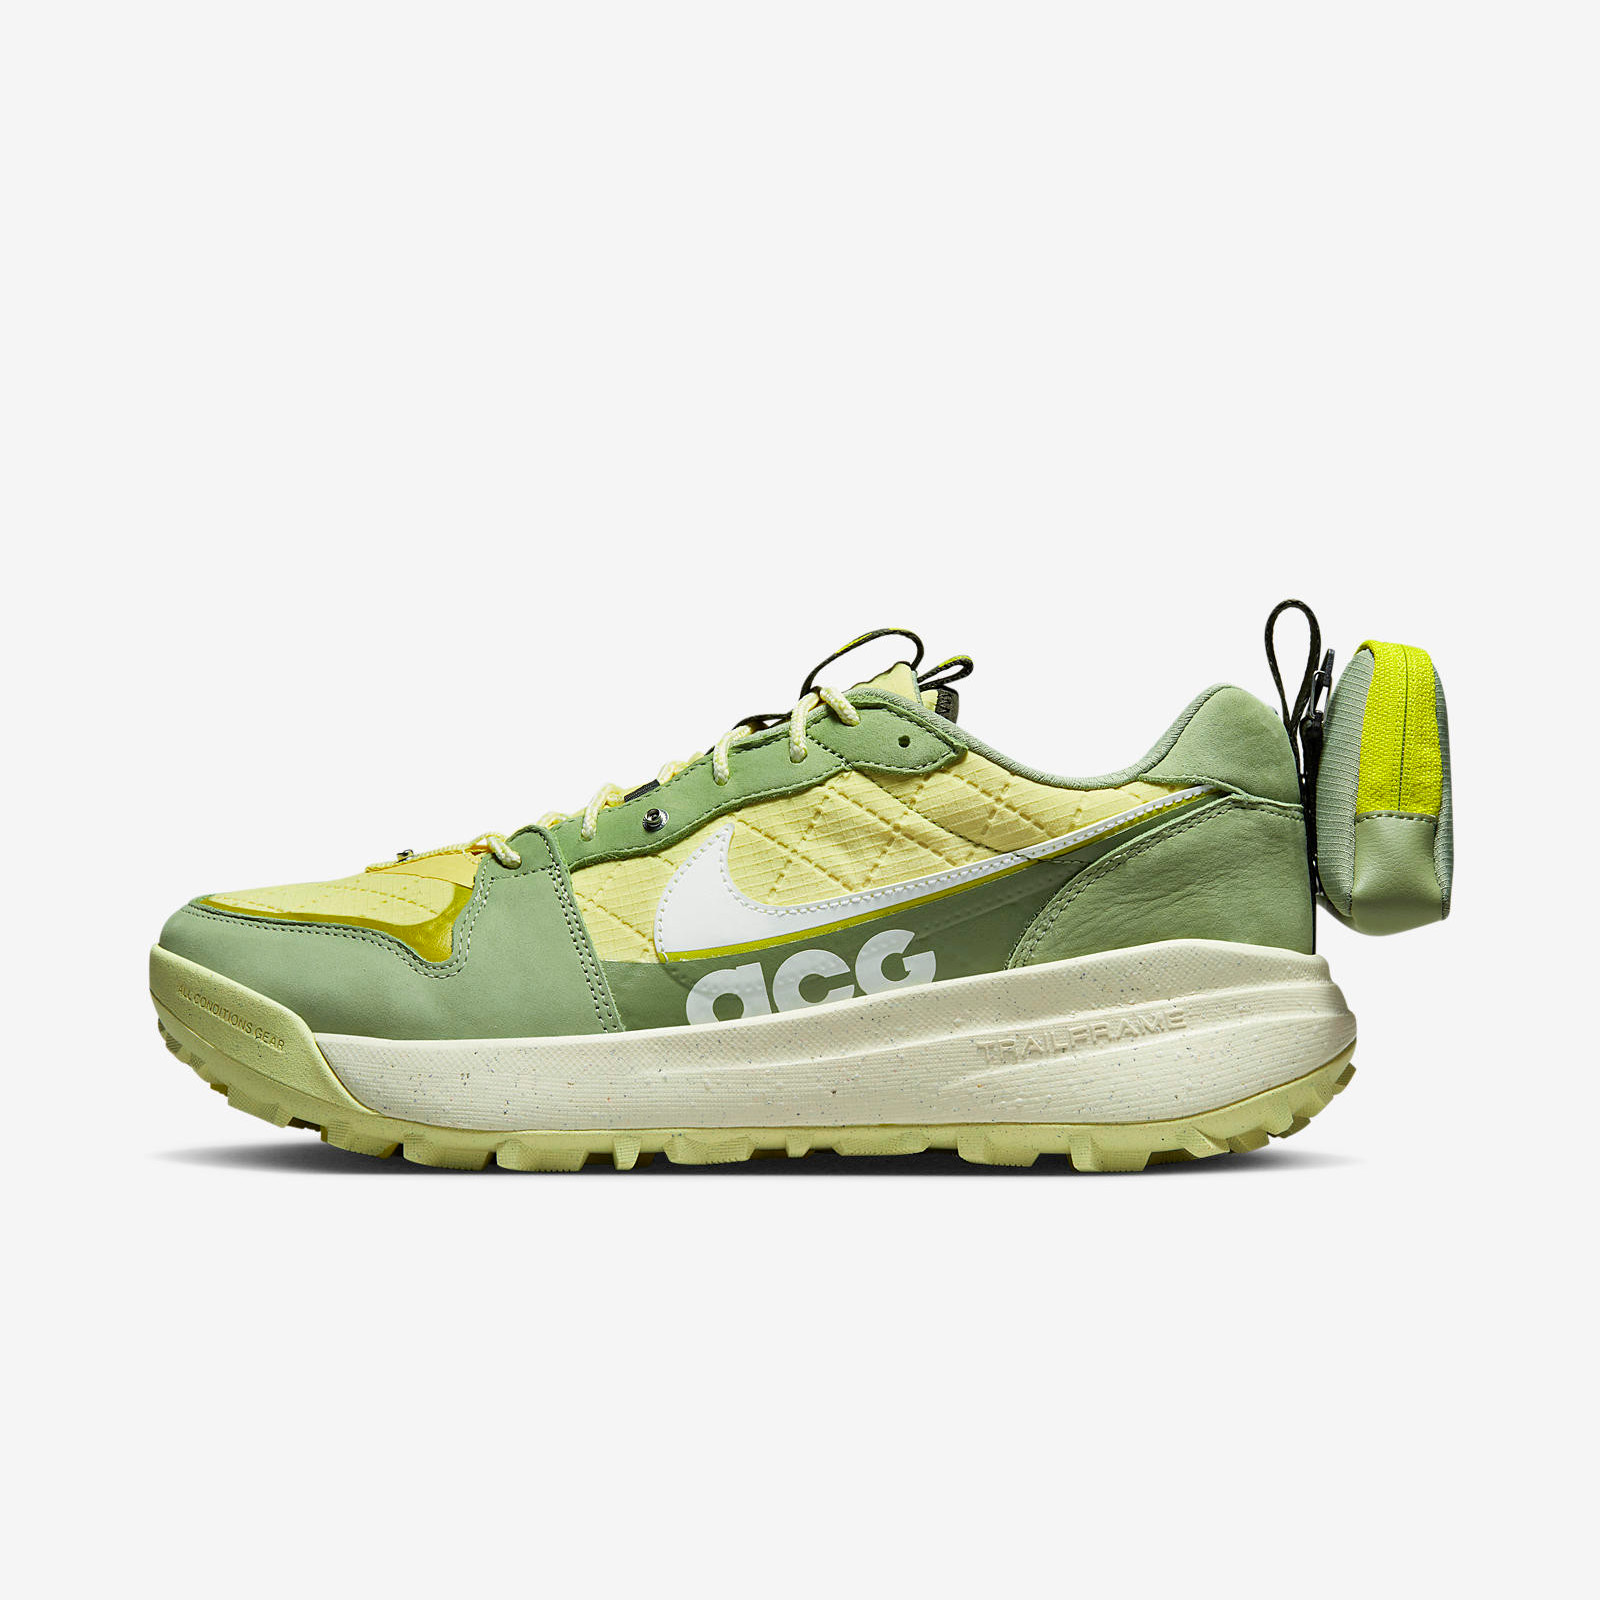 Future Movement x Nike
ACG Lowcate
« Oil Green »